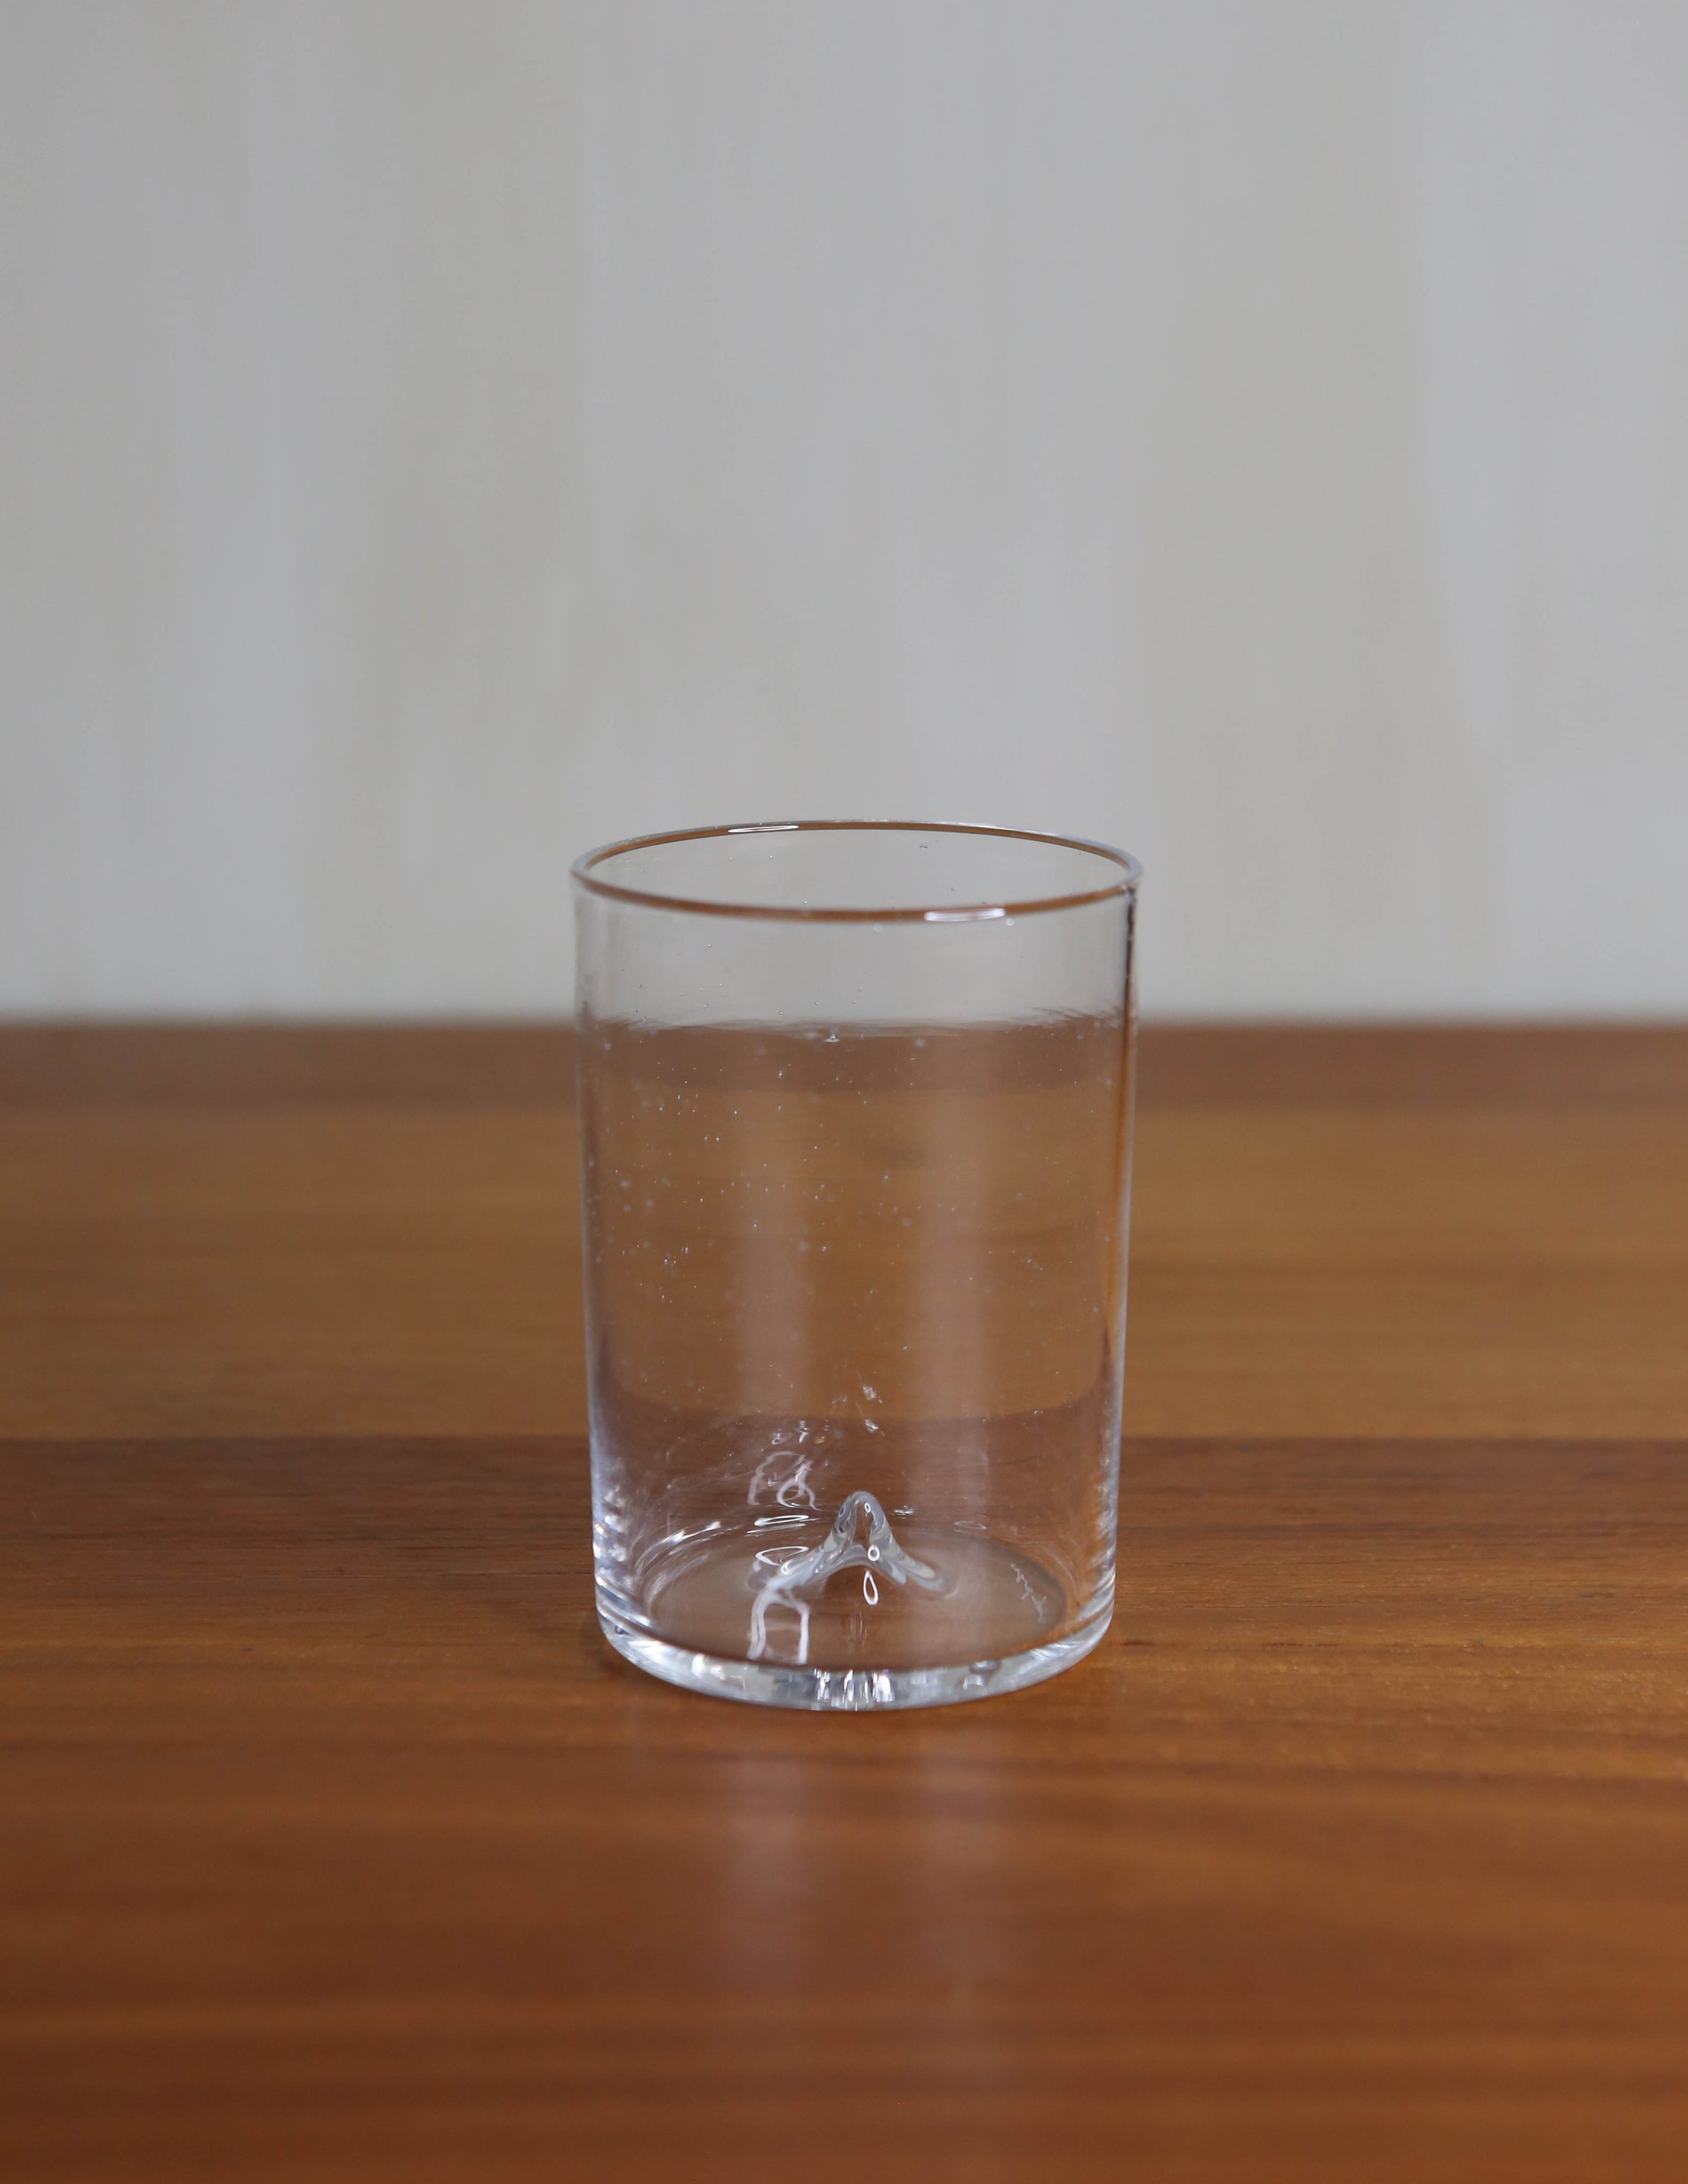 Voda Glass (Clear/Straight)